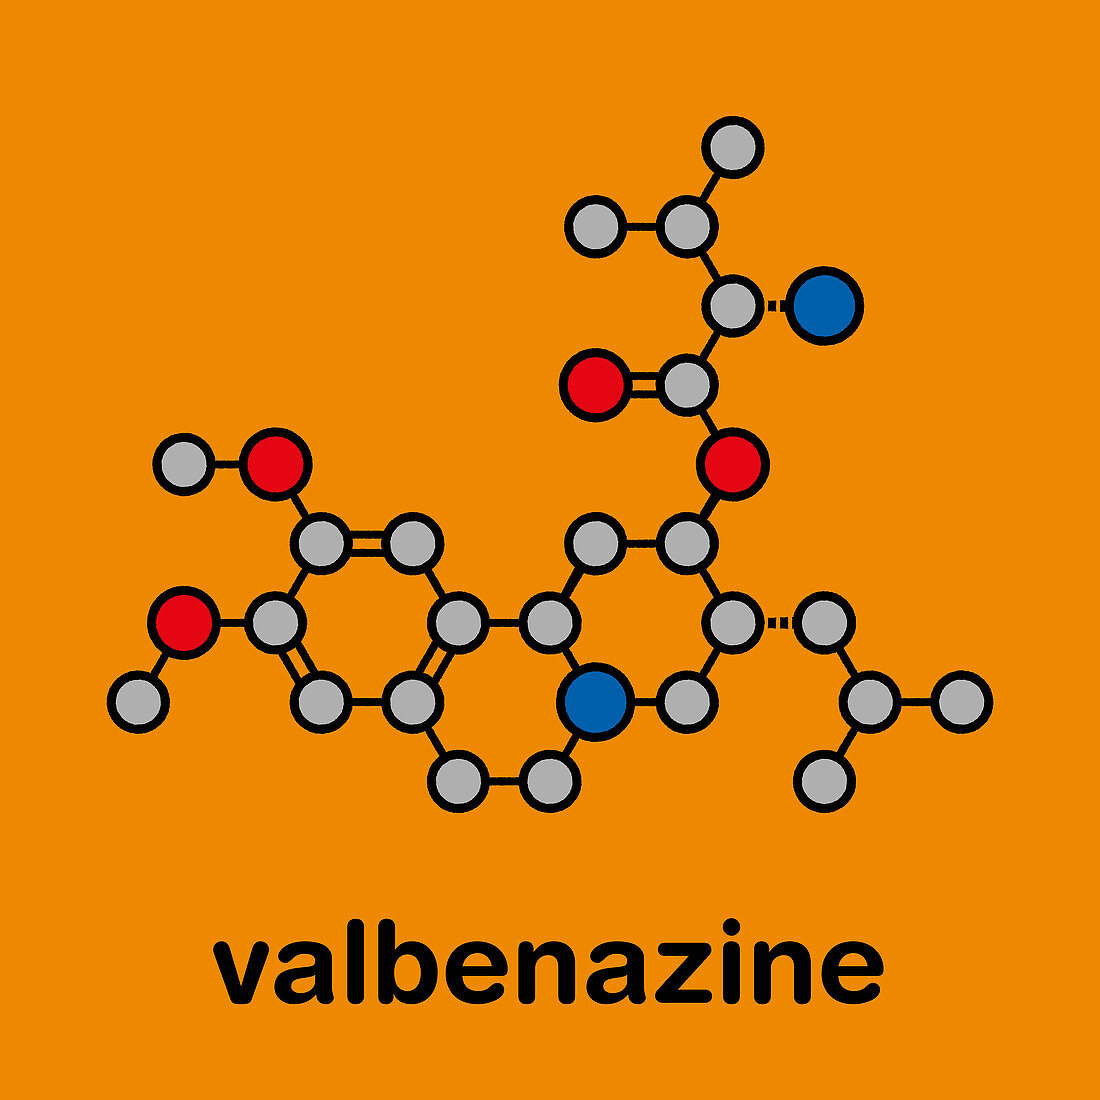 Valbenazine tardive dyskinesia drug molecule, illustration